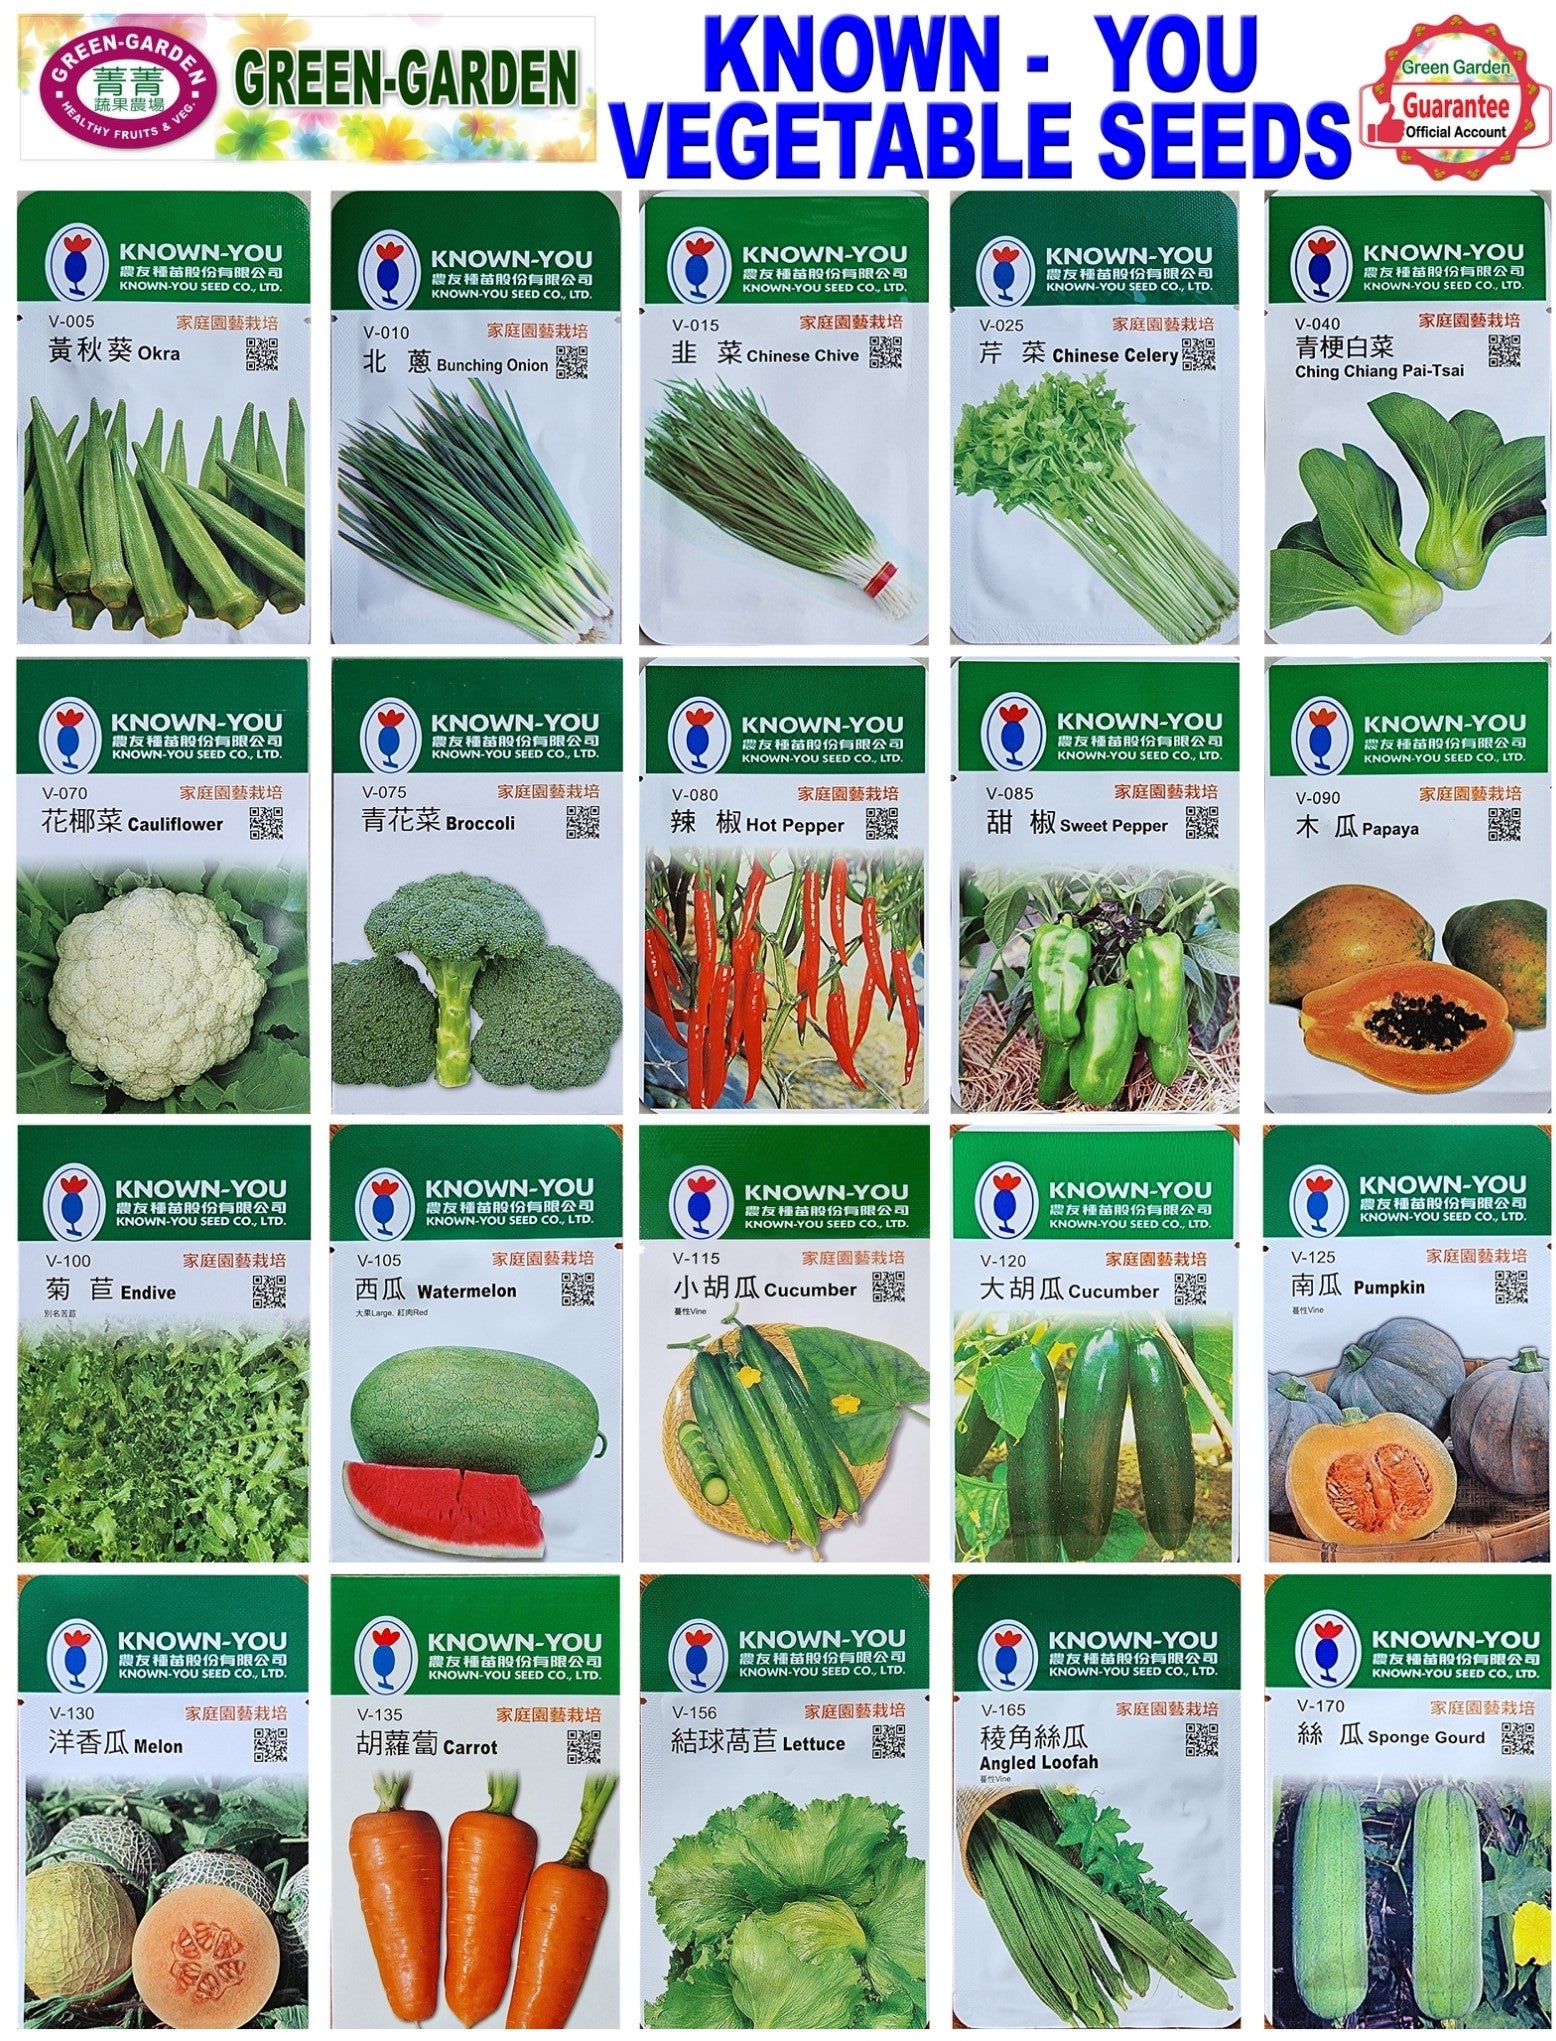 Known You Vegetable Seeds (V-200 Balsam Pear)